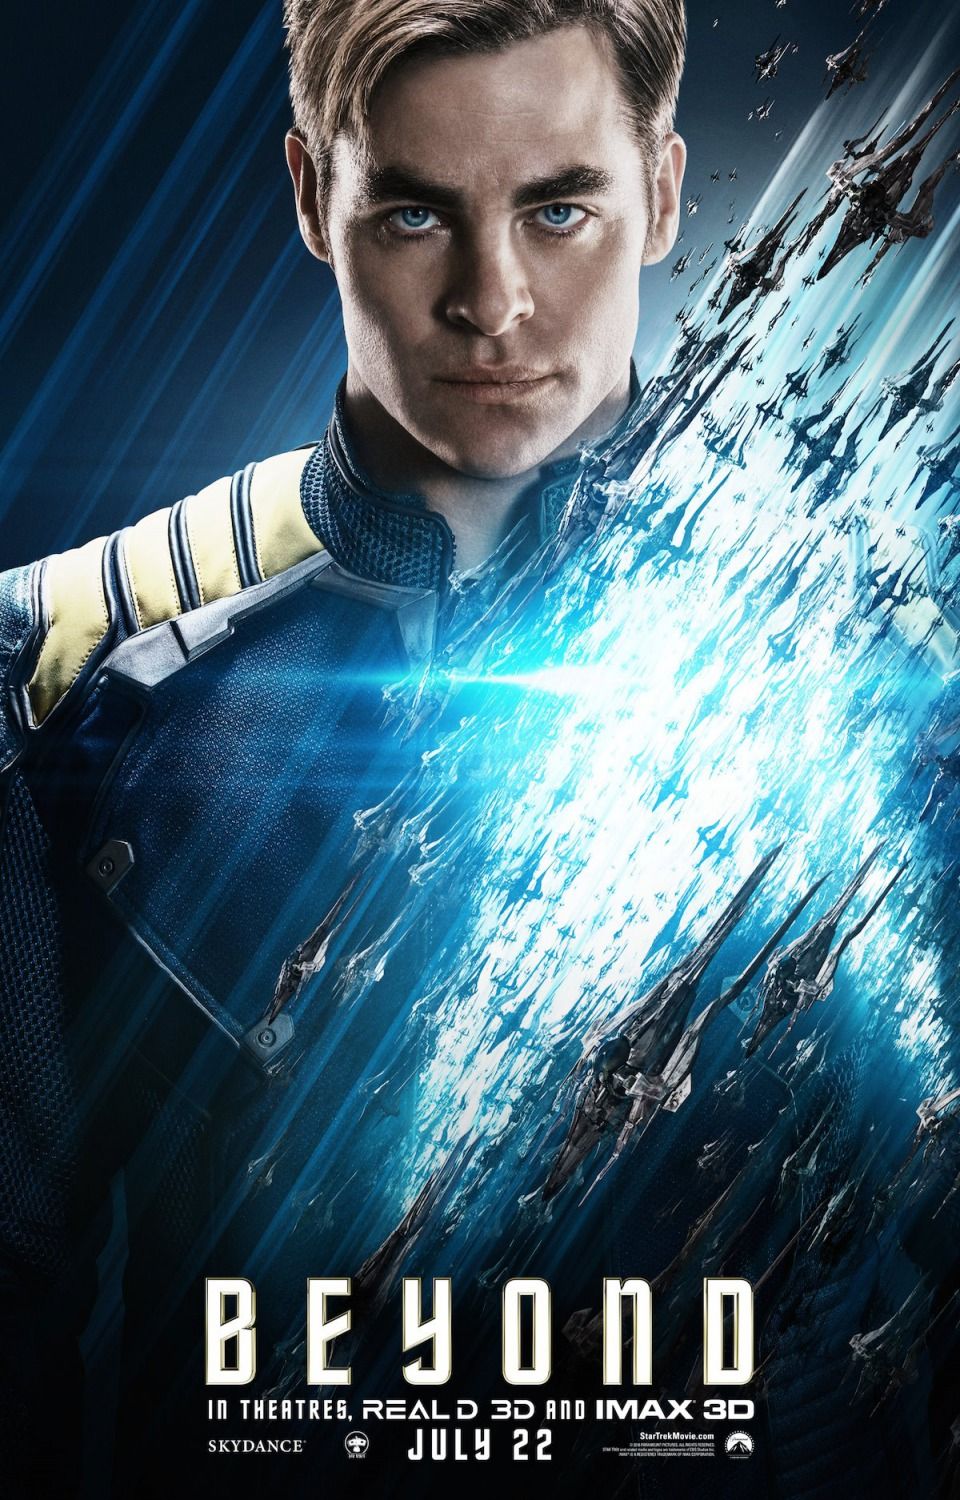 Kirk Star Trek Beyond Poster